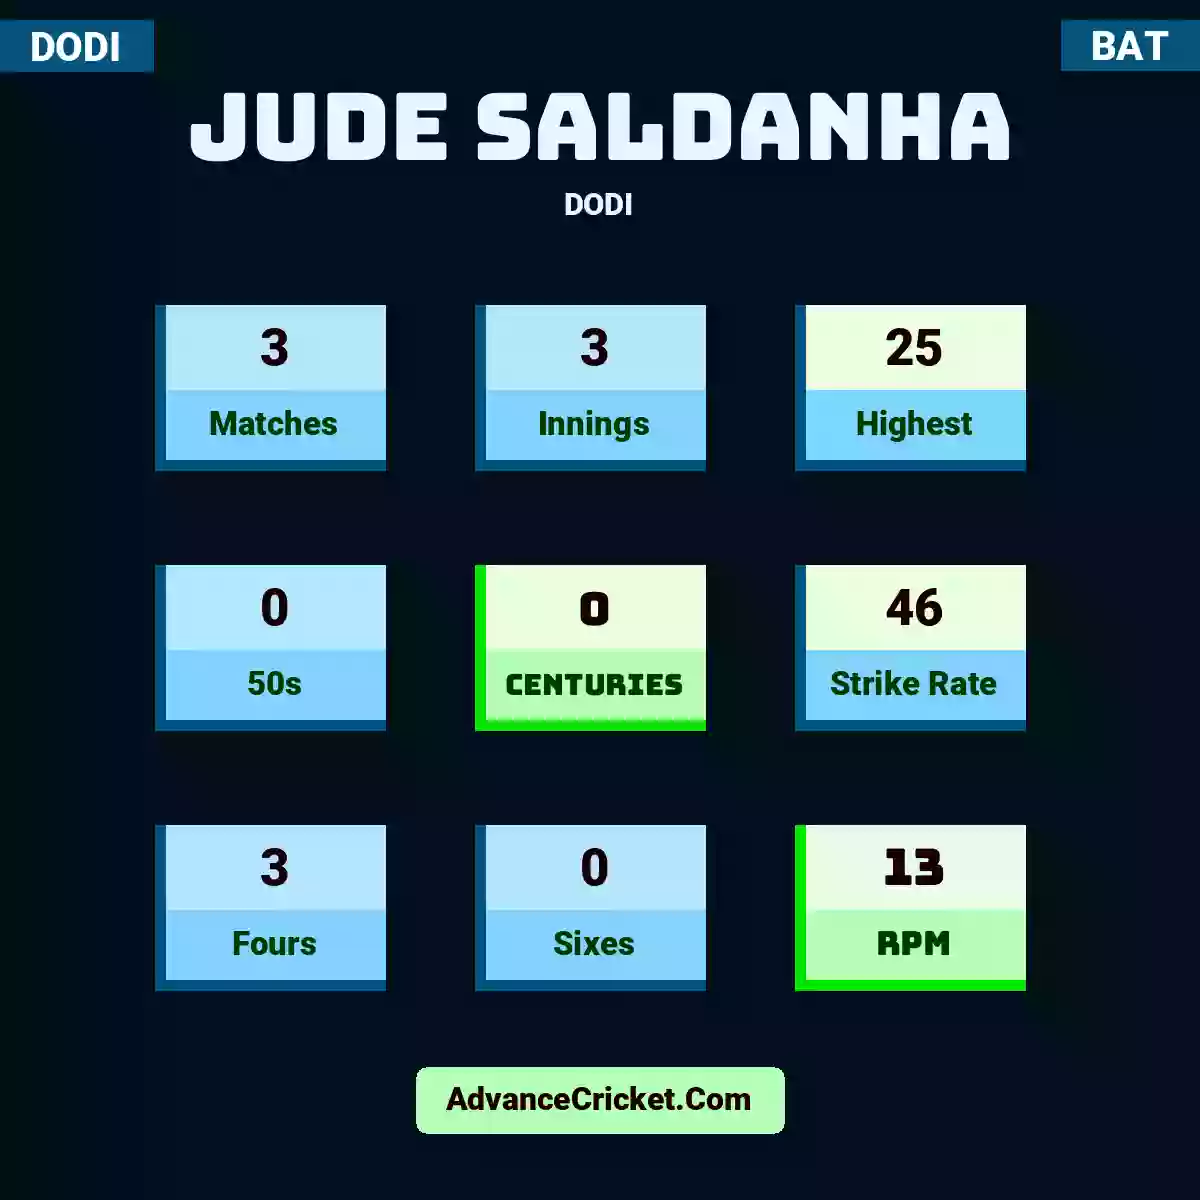 Jude Saldanha DODI , Jude Saldanha played 3 matches, scored 25 runs as highest, 0 half-centuries, and 0 centuries, with a strike rate of 46. J.Saldanha hit 3 fours and 0 sixes, with an RPM of 13.